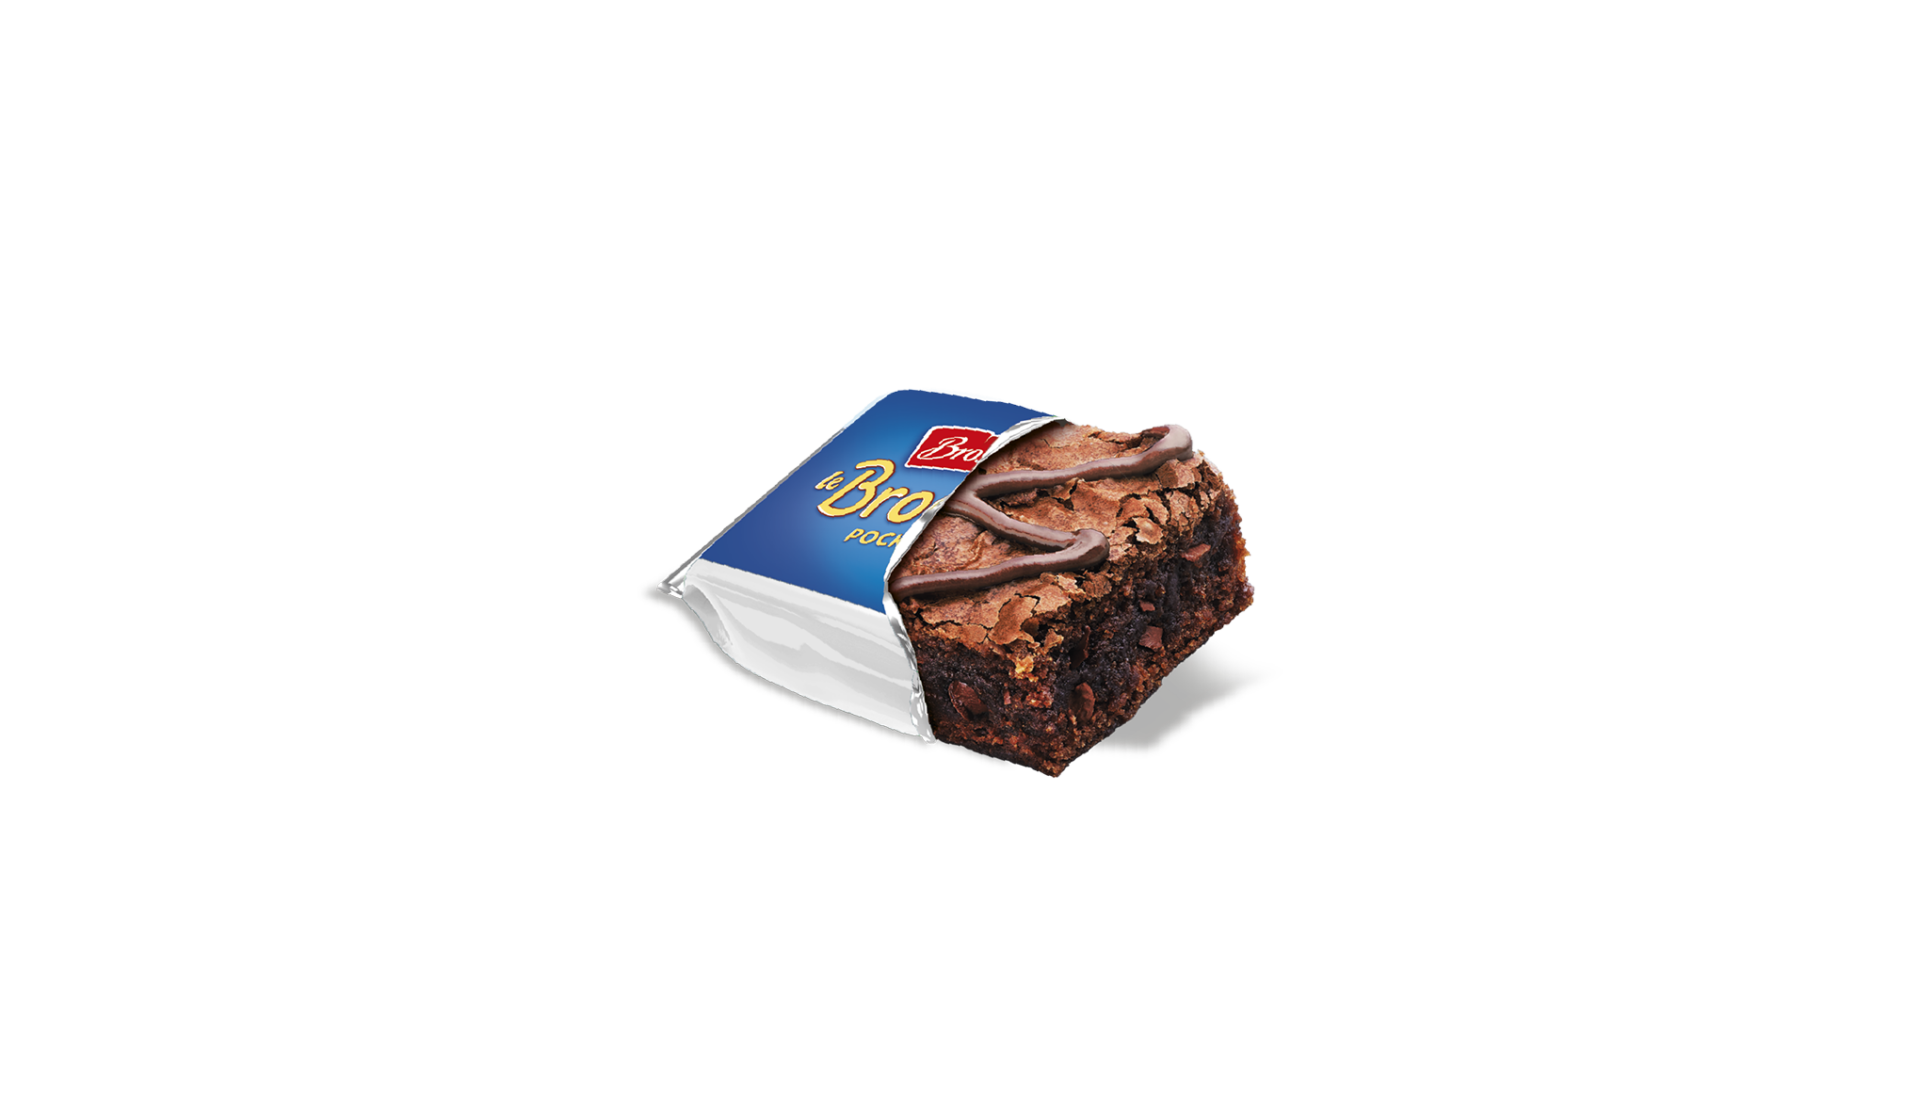 Mini Brownie Chocolat Pépites – Brossard